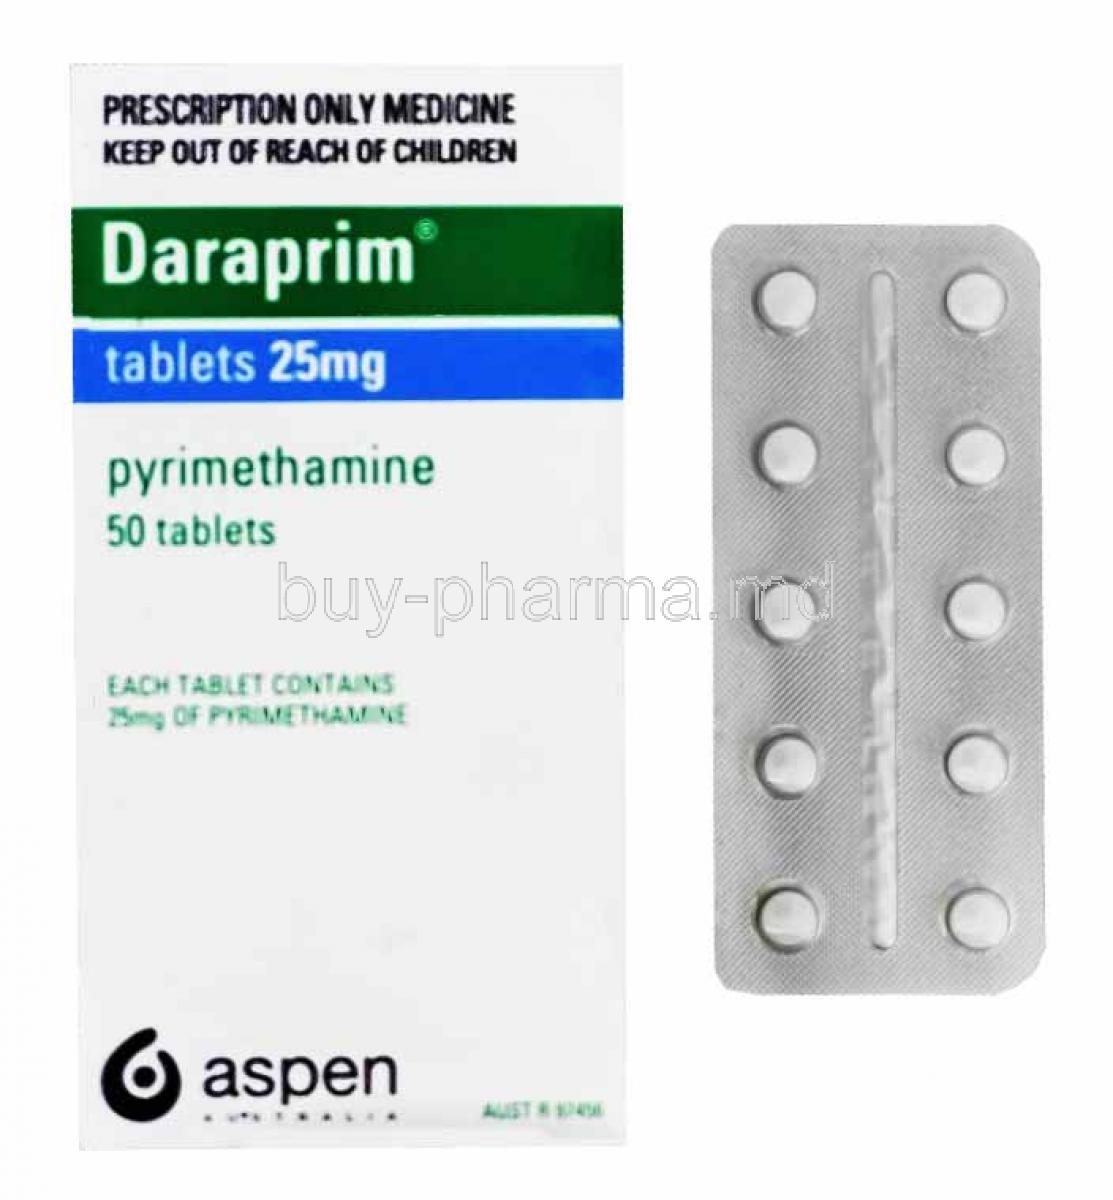 Daraprim, Pyrimethamine box and tablets